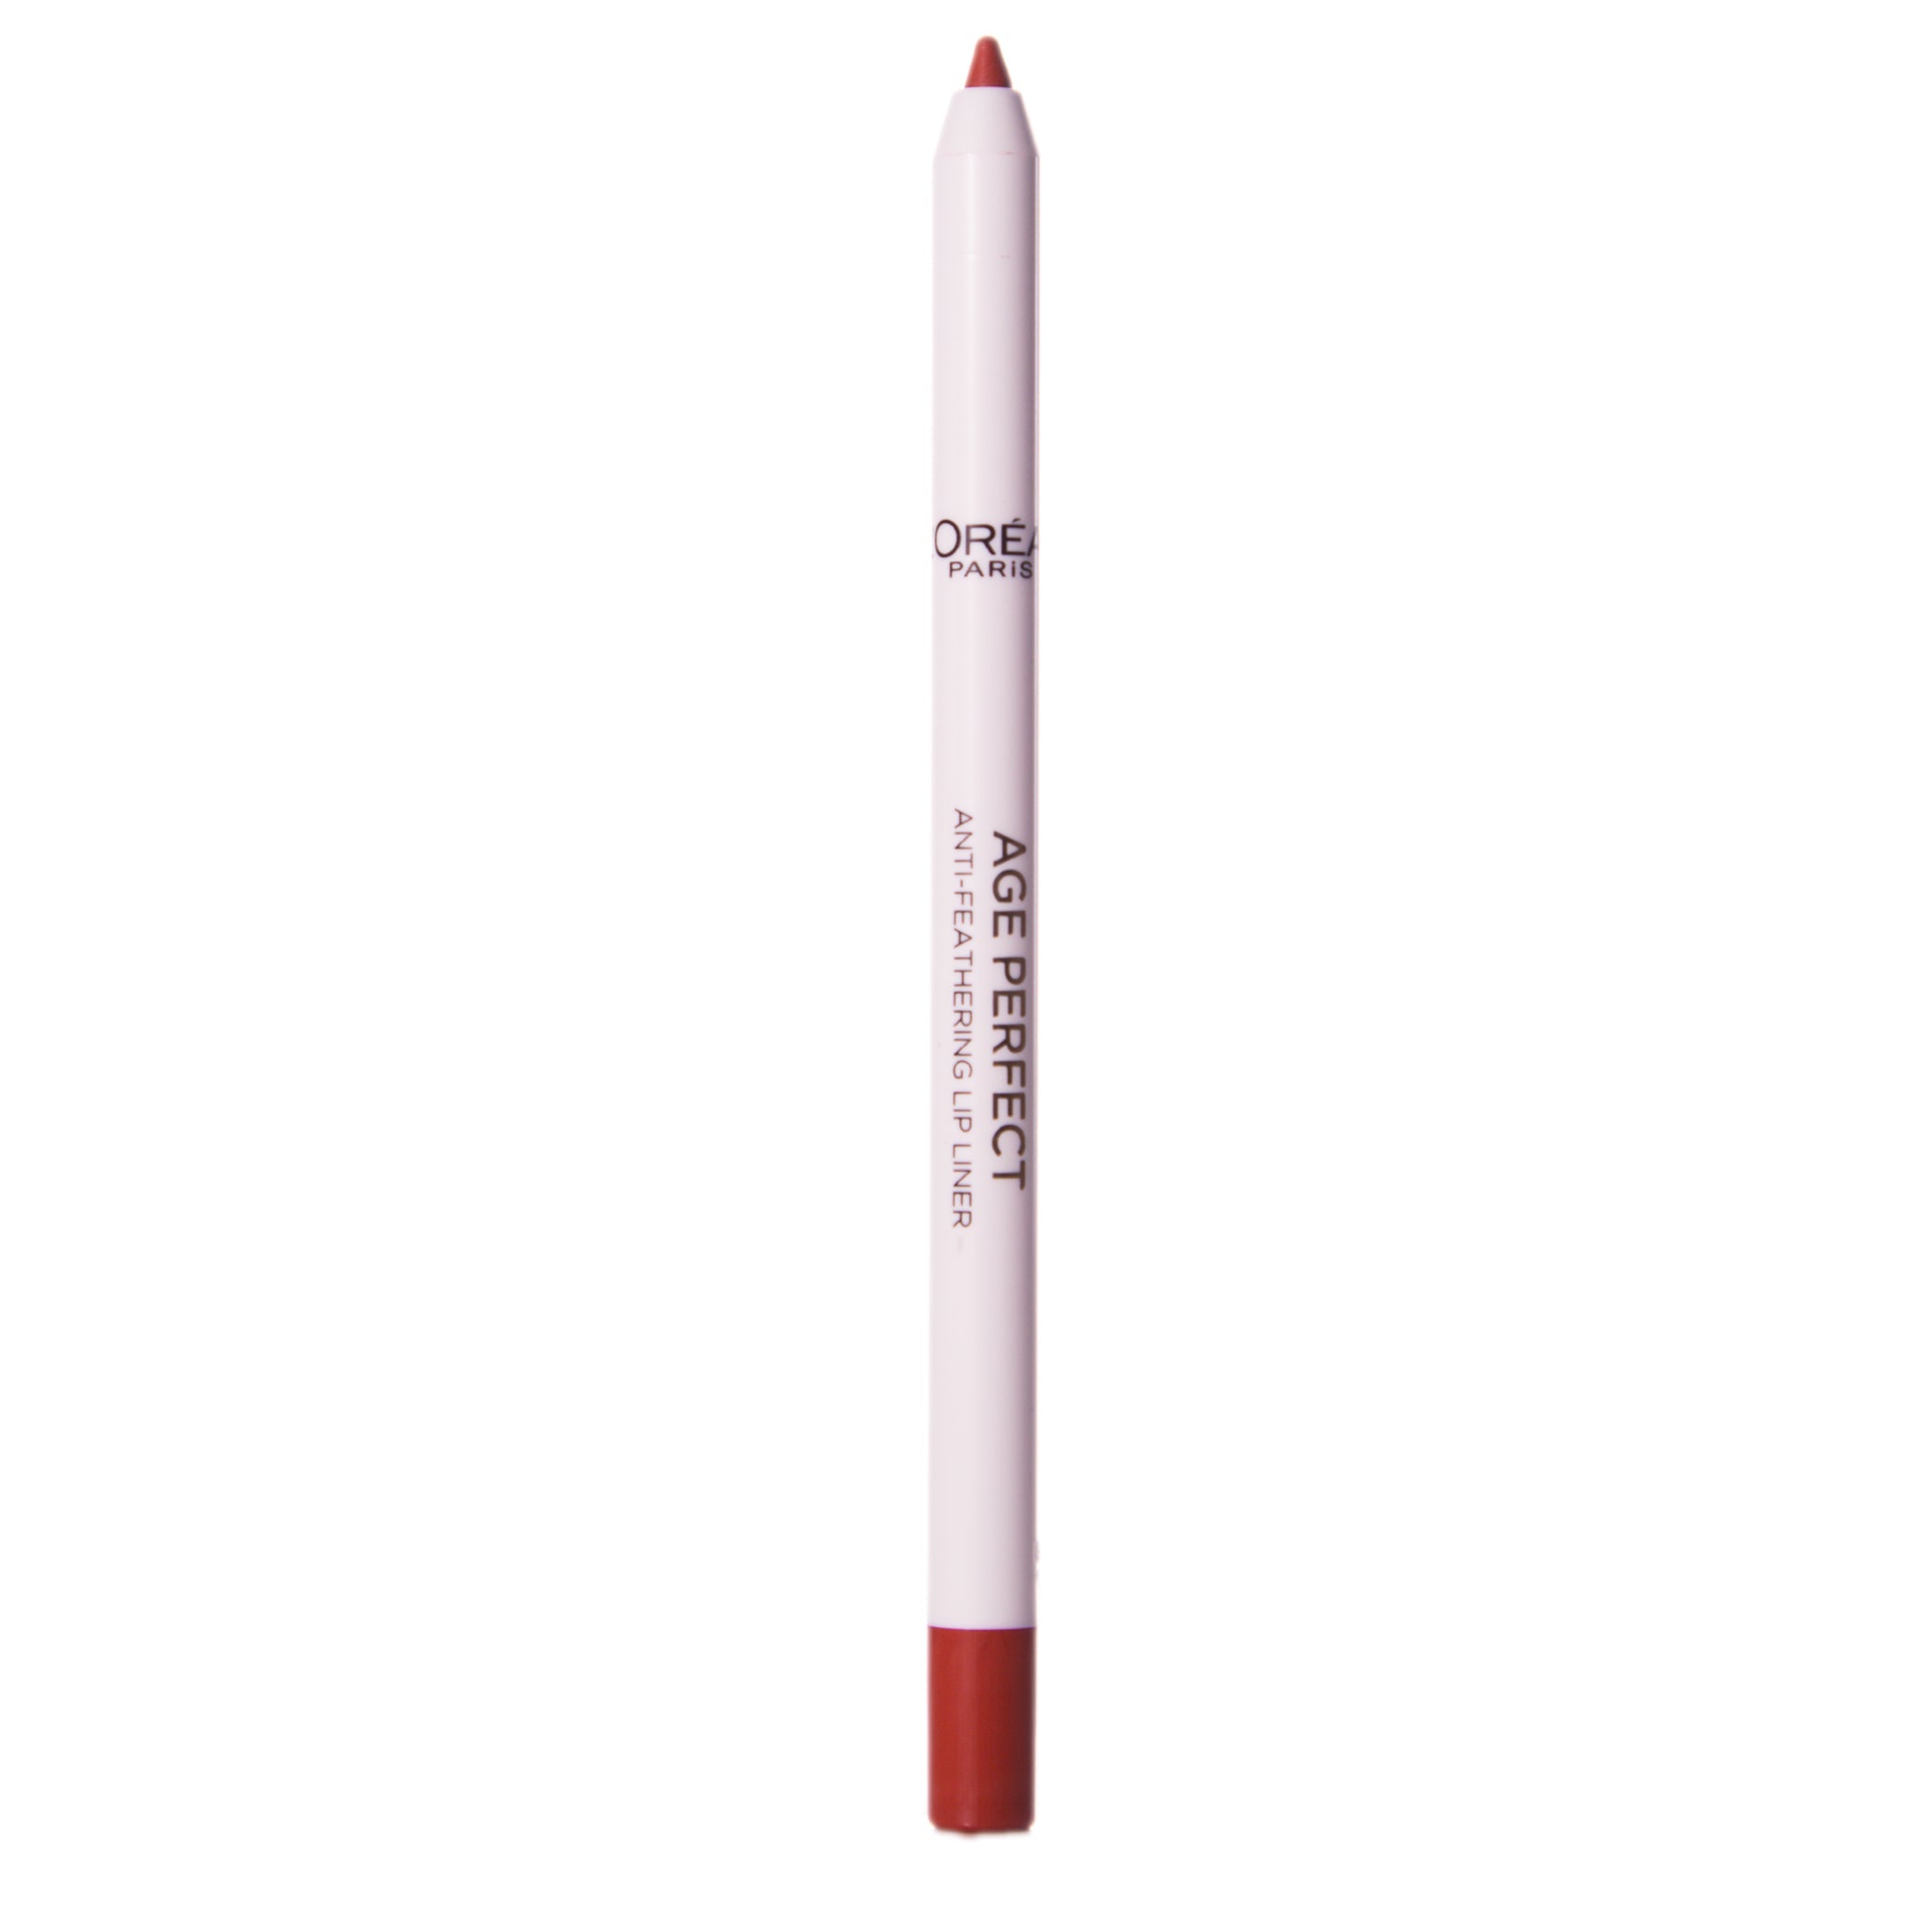 L'Oreal Age Perfect Anti-Feathering Lipliner Pencil - 299 Pearl Brick